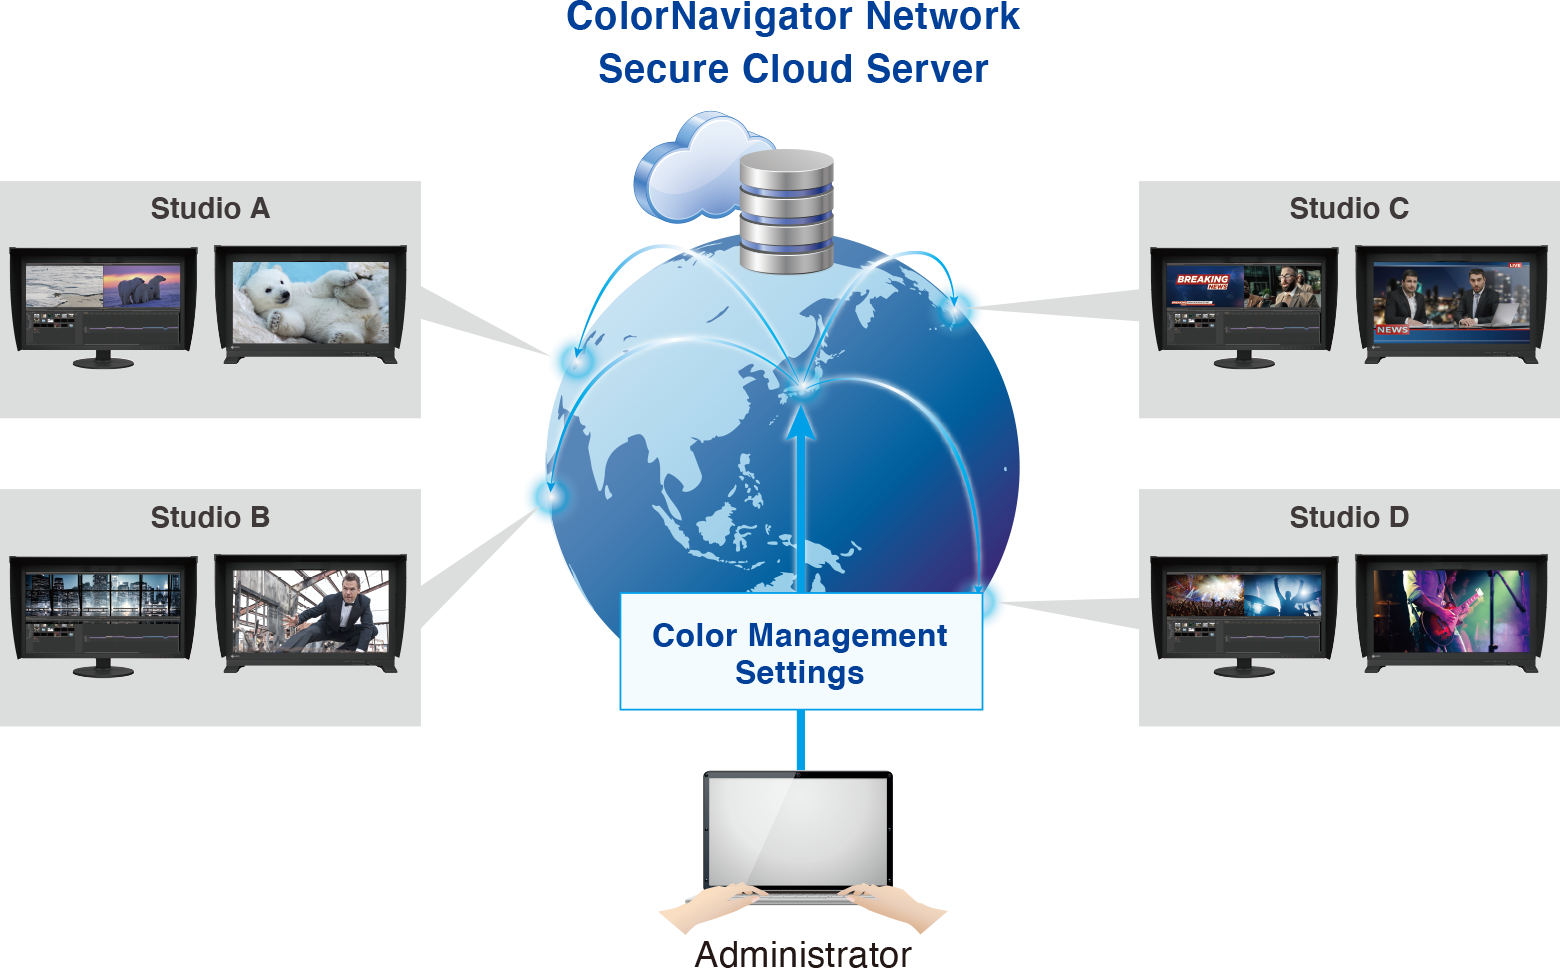 ColorNavigator Network Secure Cloud Server